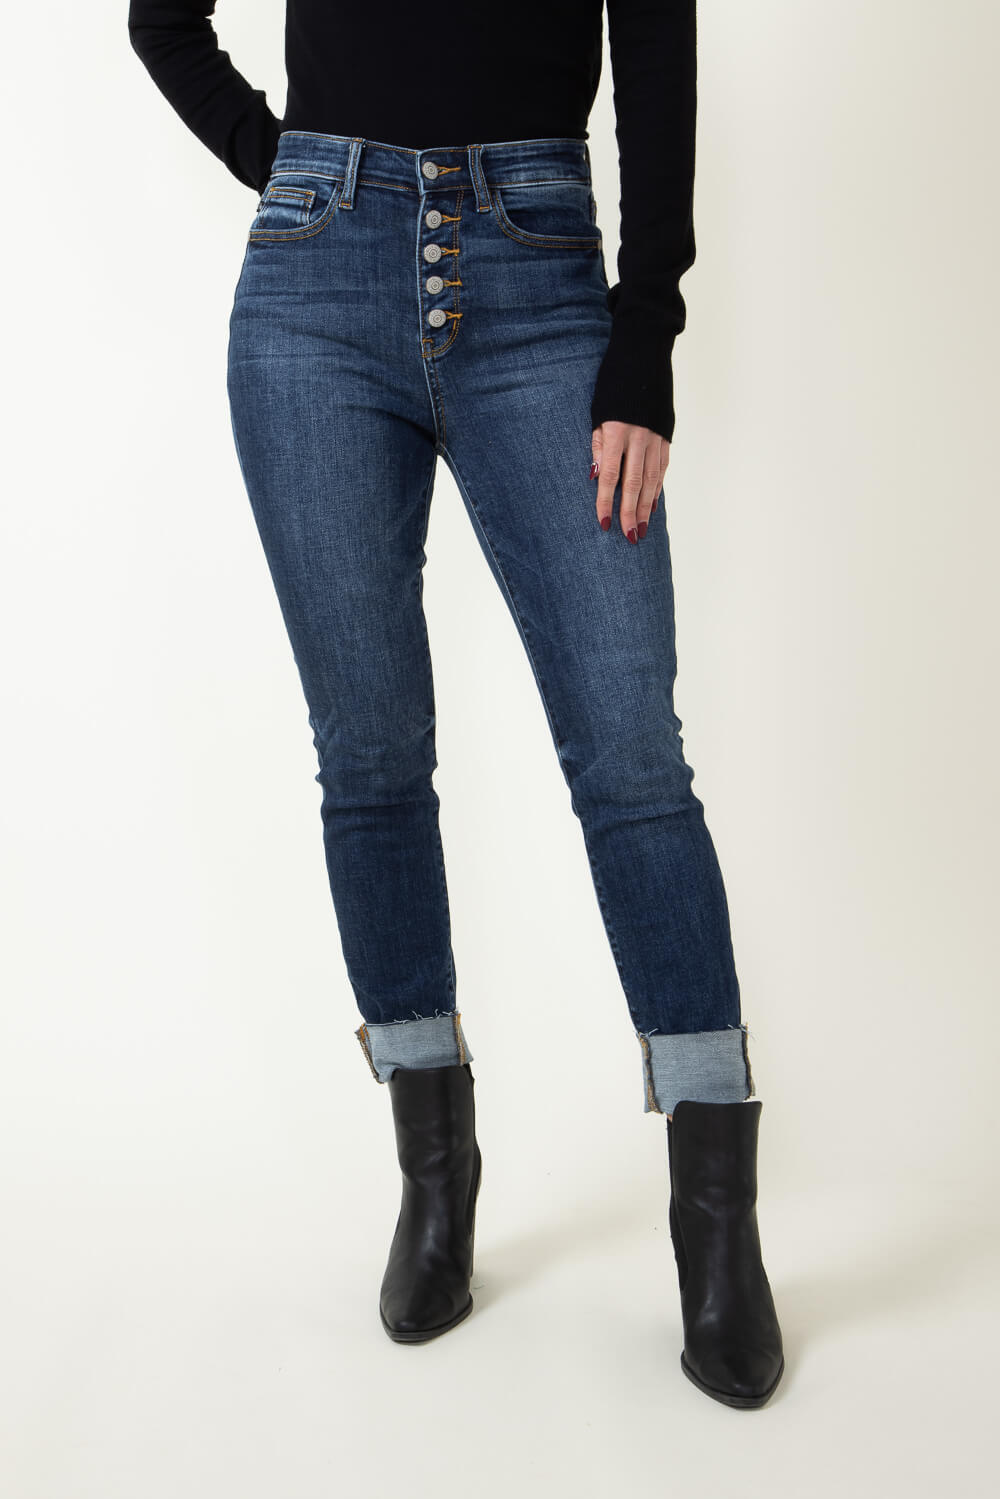 Seine High Rise Skinny Jeans 30 Inch - Odeon Blue | Universal Standard